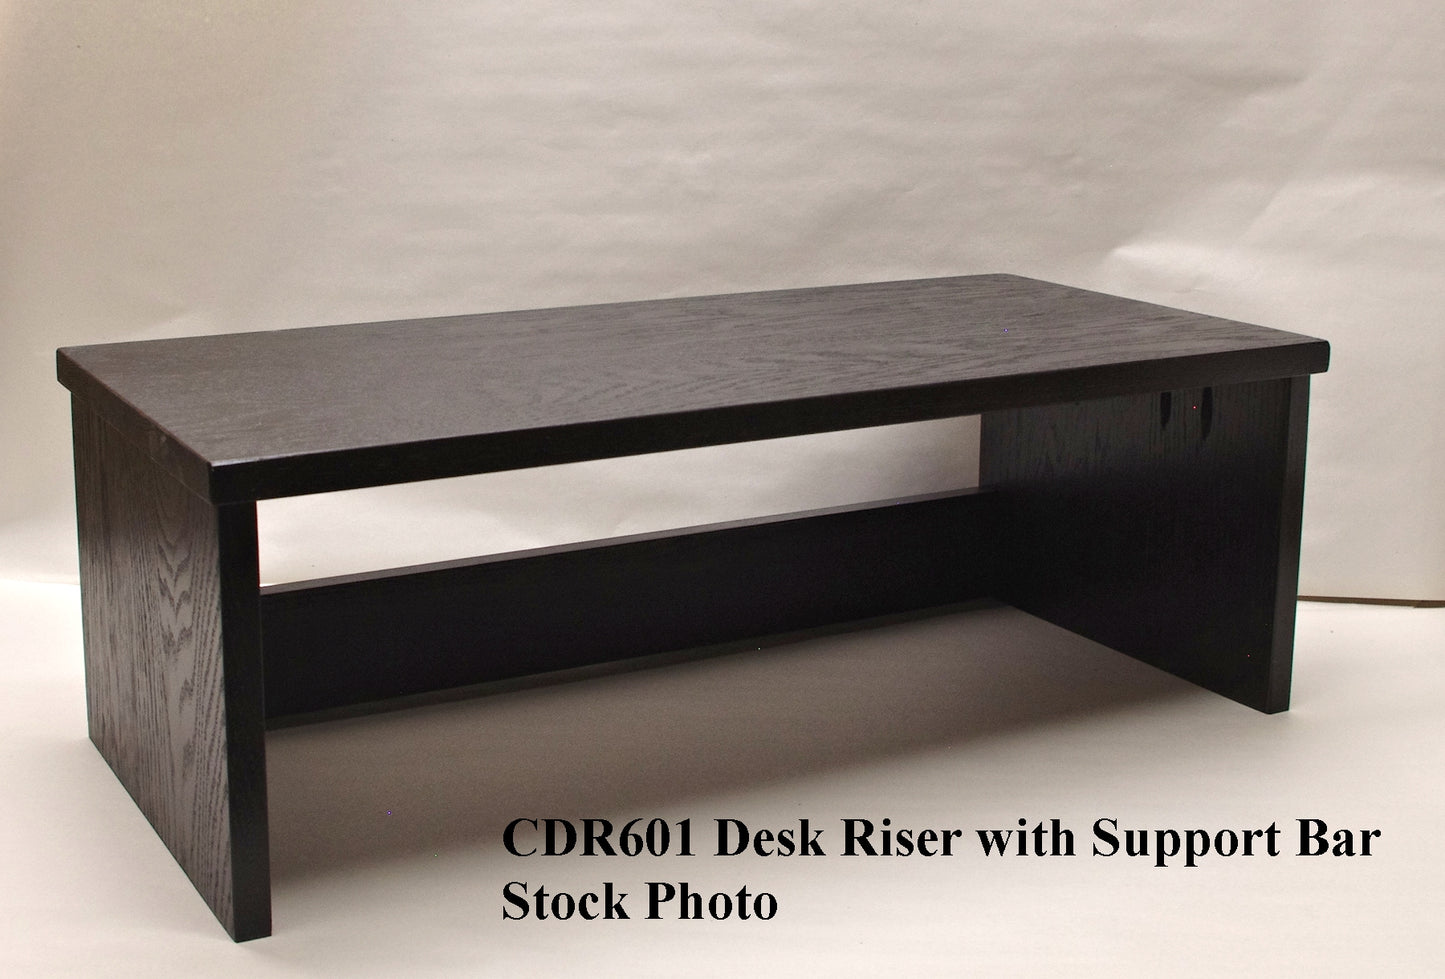 CDR601 Desk Riser with Support Bar - 20" Length